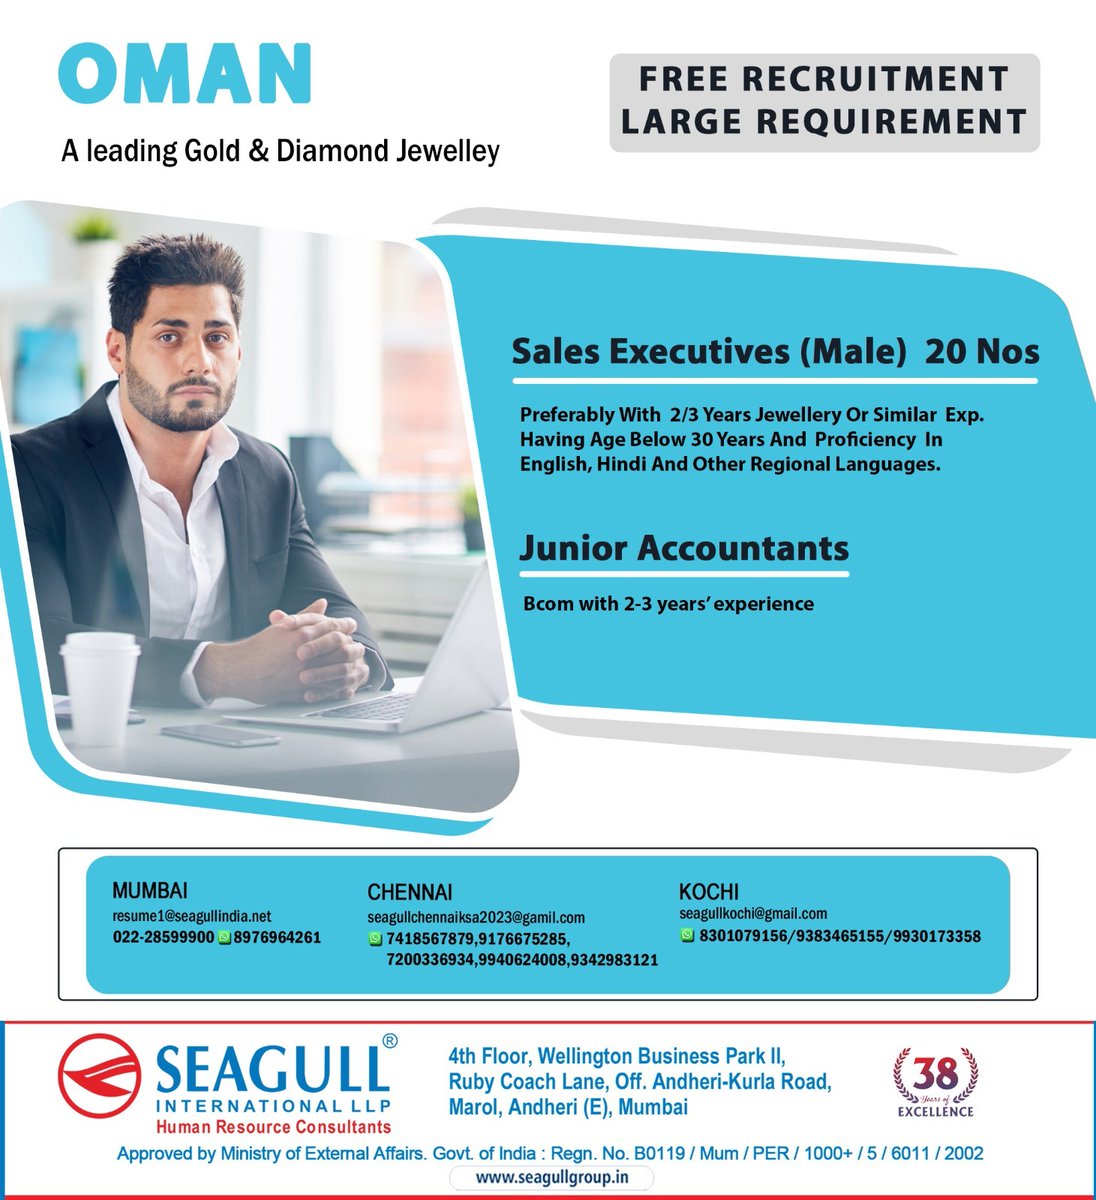 🇴🇲Oman Jobs
‼️Free Recruitment 
✔️Large Requirement 
📍Location- Mumbai , Chennai , Kochi
.

.

.
#omanjobs #seagull #mumbaijobs #chennaijobs #kochijobs #salesexecutive #junioraccountants